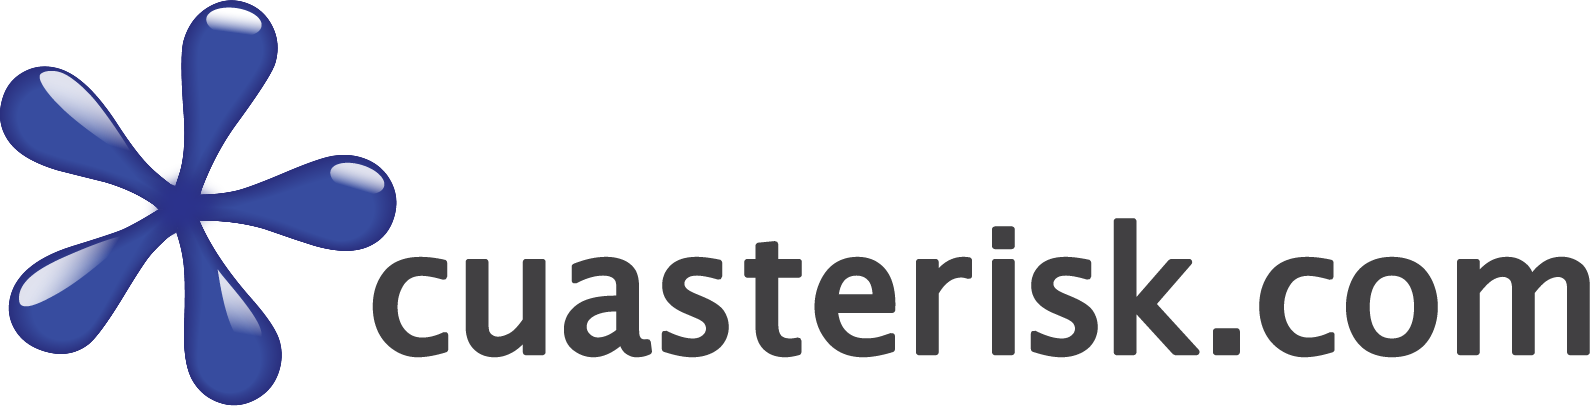 cuasterisk.com logo